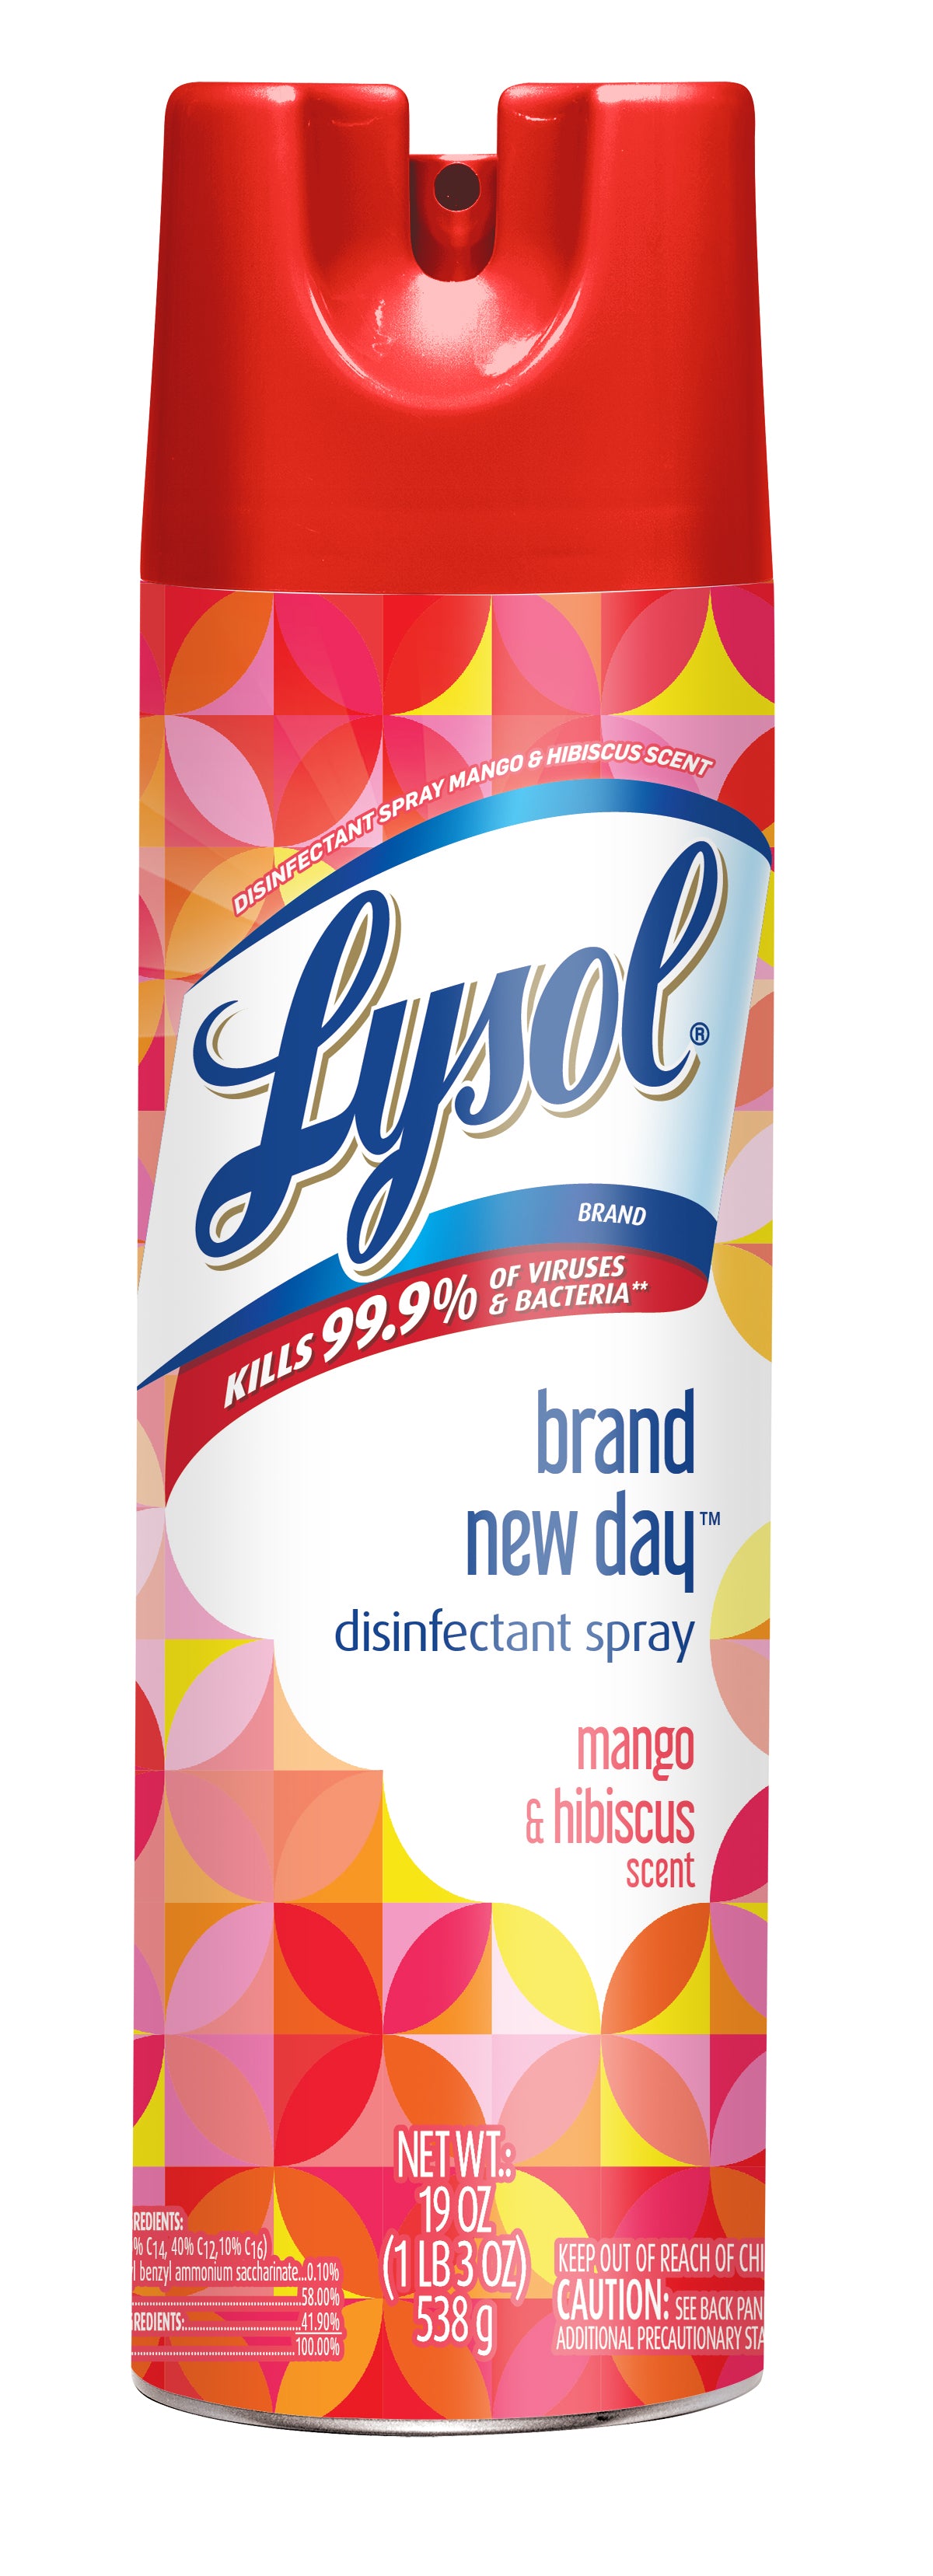 Lysol Disinfectant Spray Brand New Day Mango & Hibiscus - 19oz/12pk